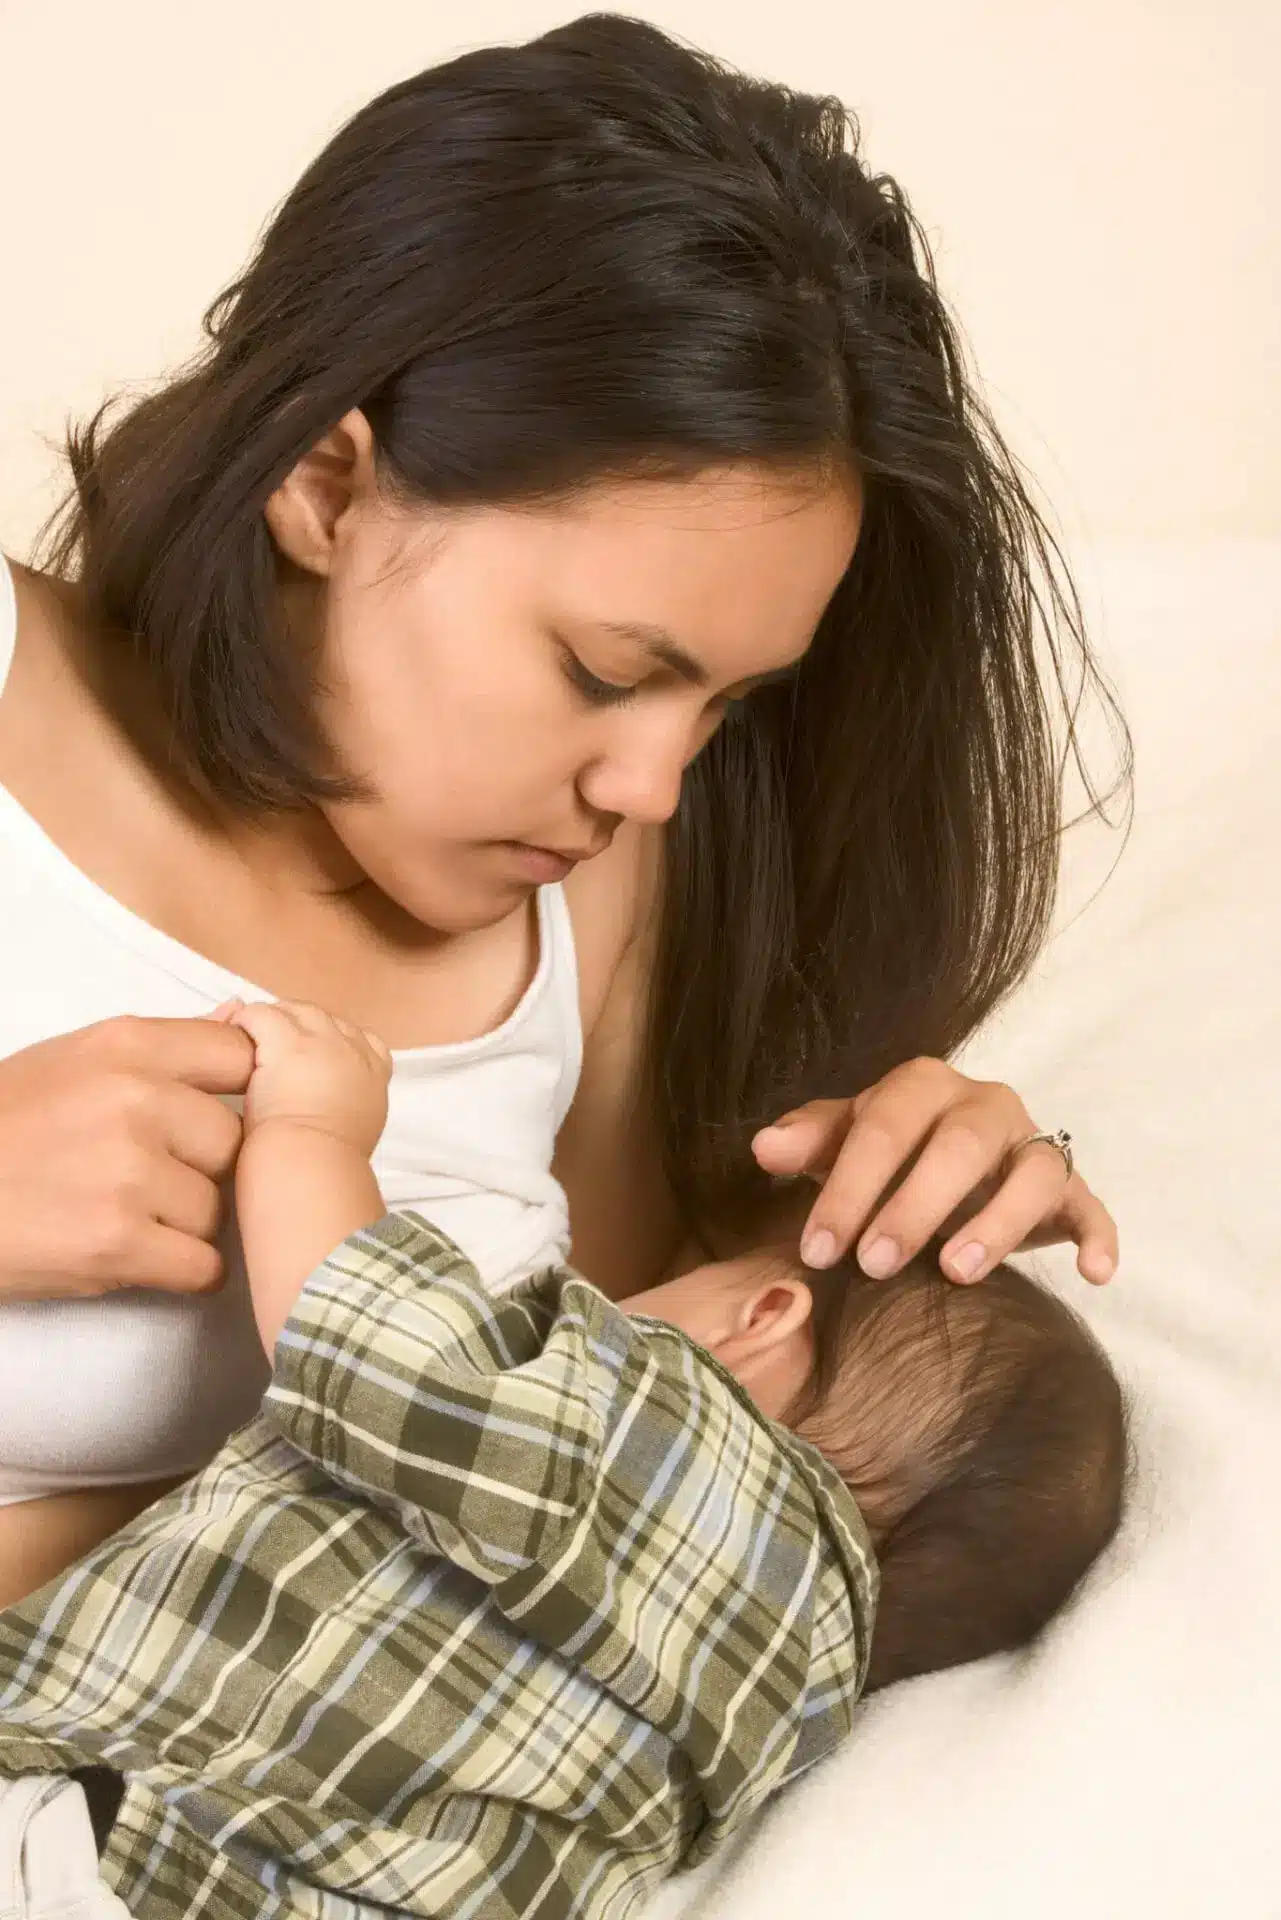 safe to tan while breastfeeding